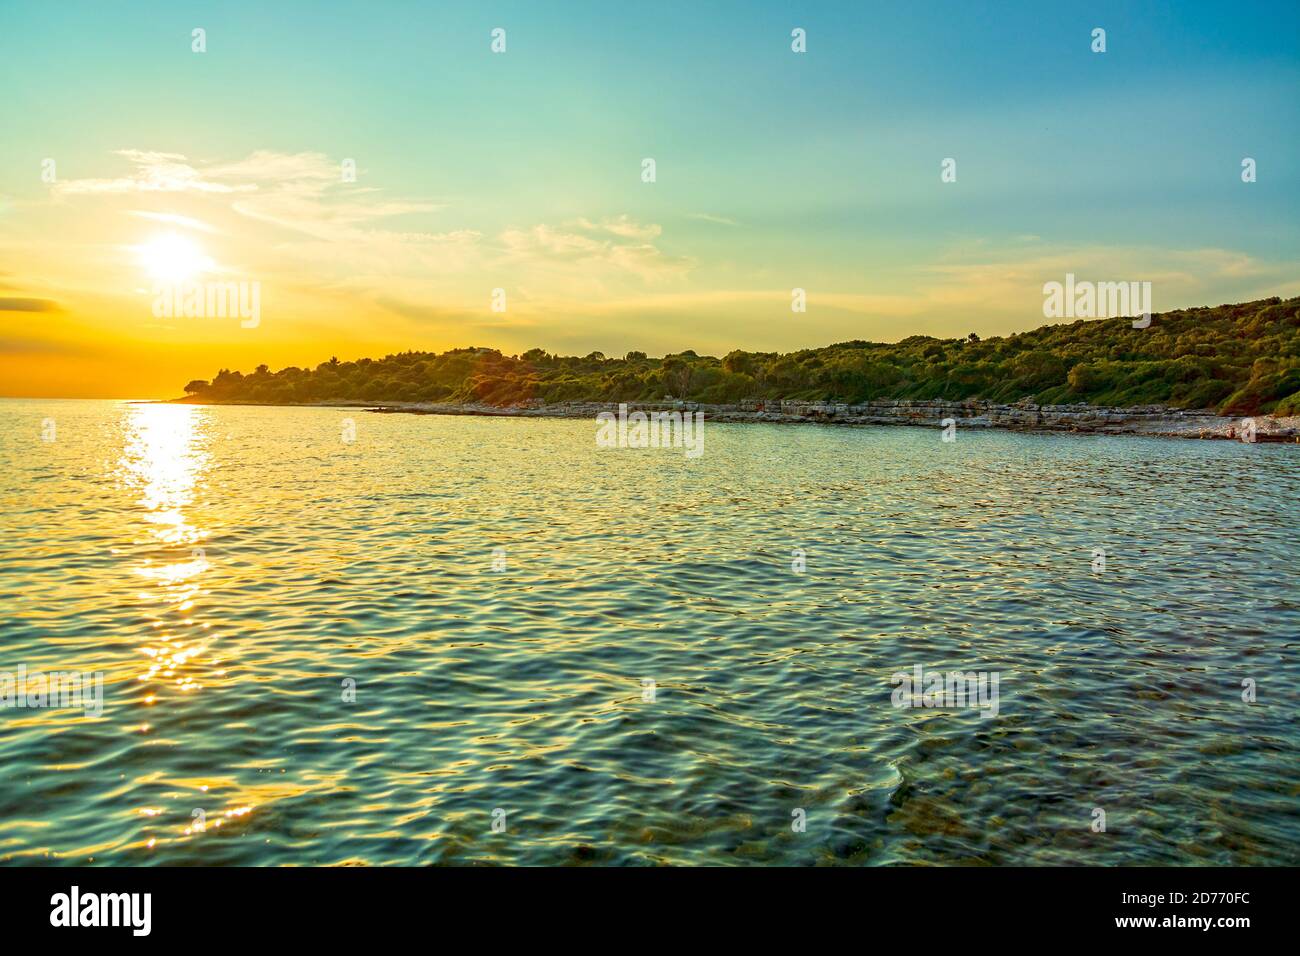 Adriatic sea shore in Croatia at susnet by Adriatic Sea with pinetree near Pula, Valbandon, Istria peninsula, Barbariga beach. Stock Photo